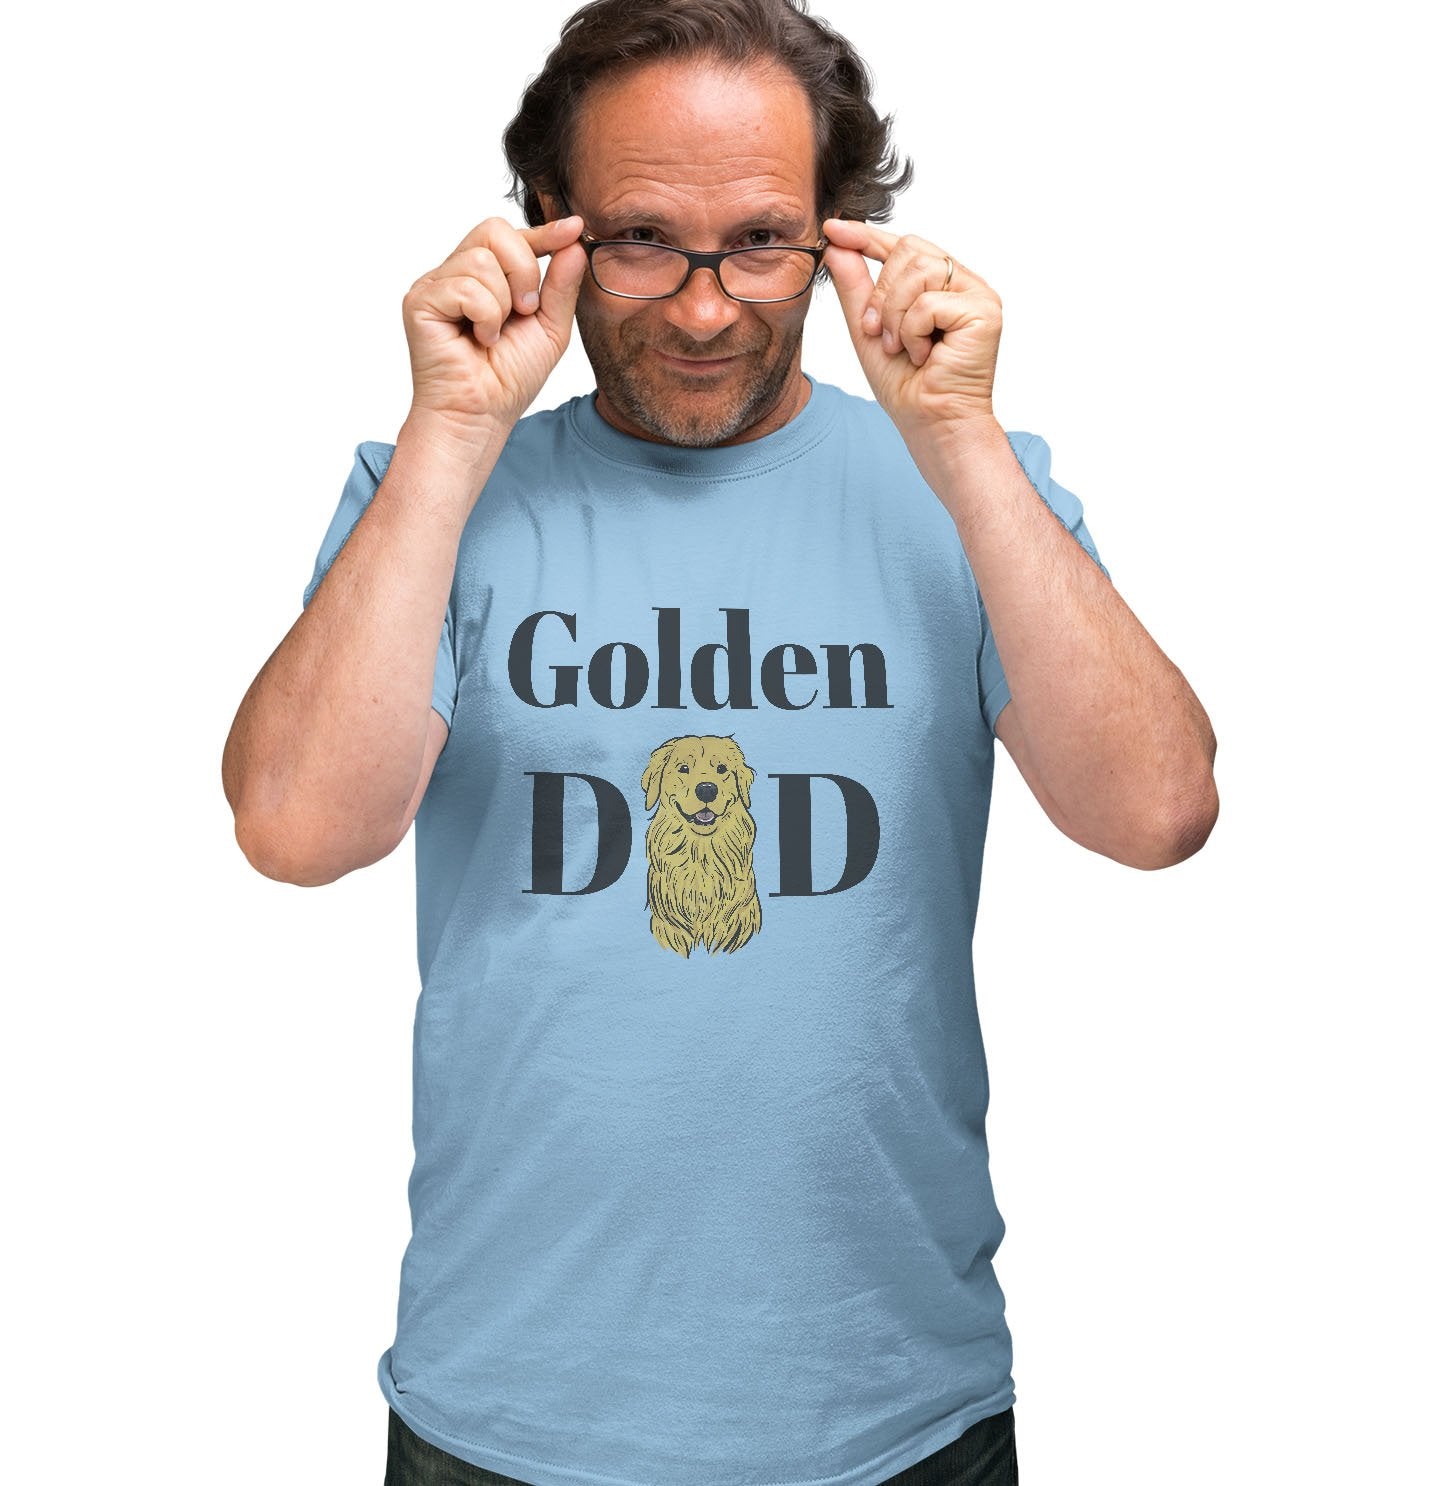 Golden Dad Illustration - Adult Unisex T-Shirt